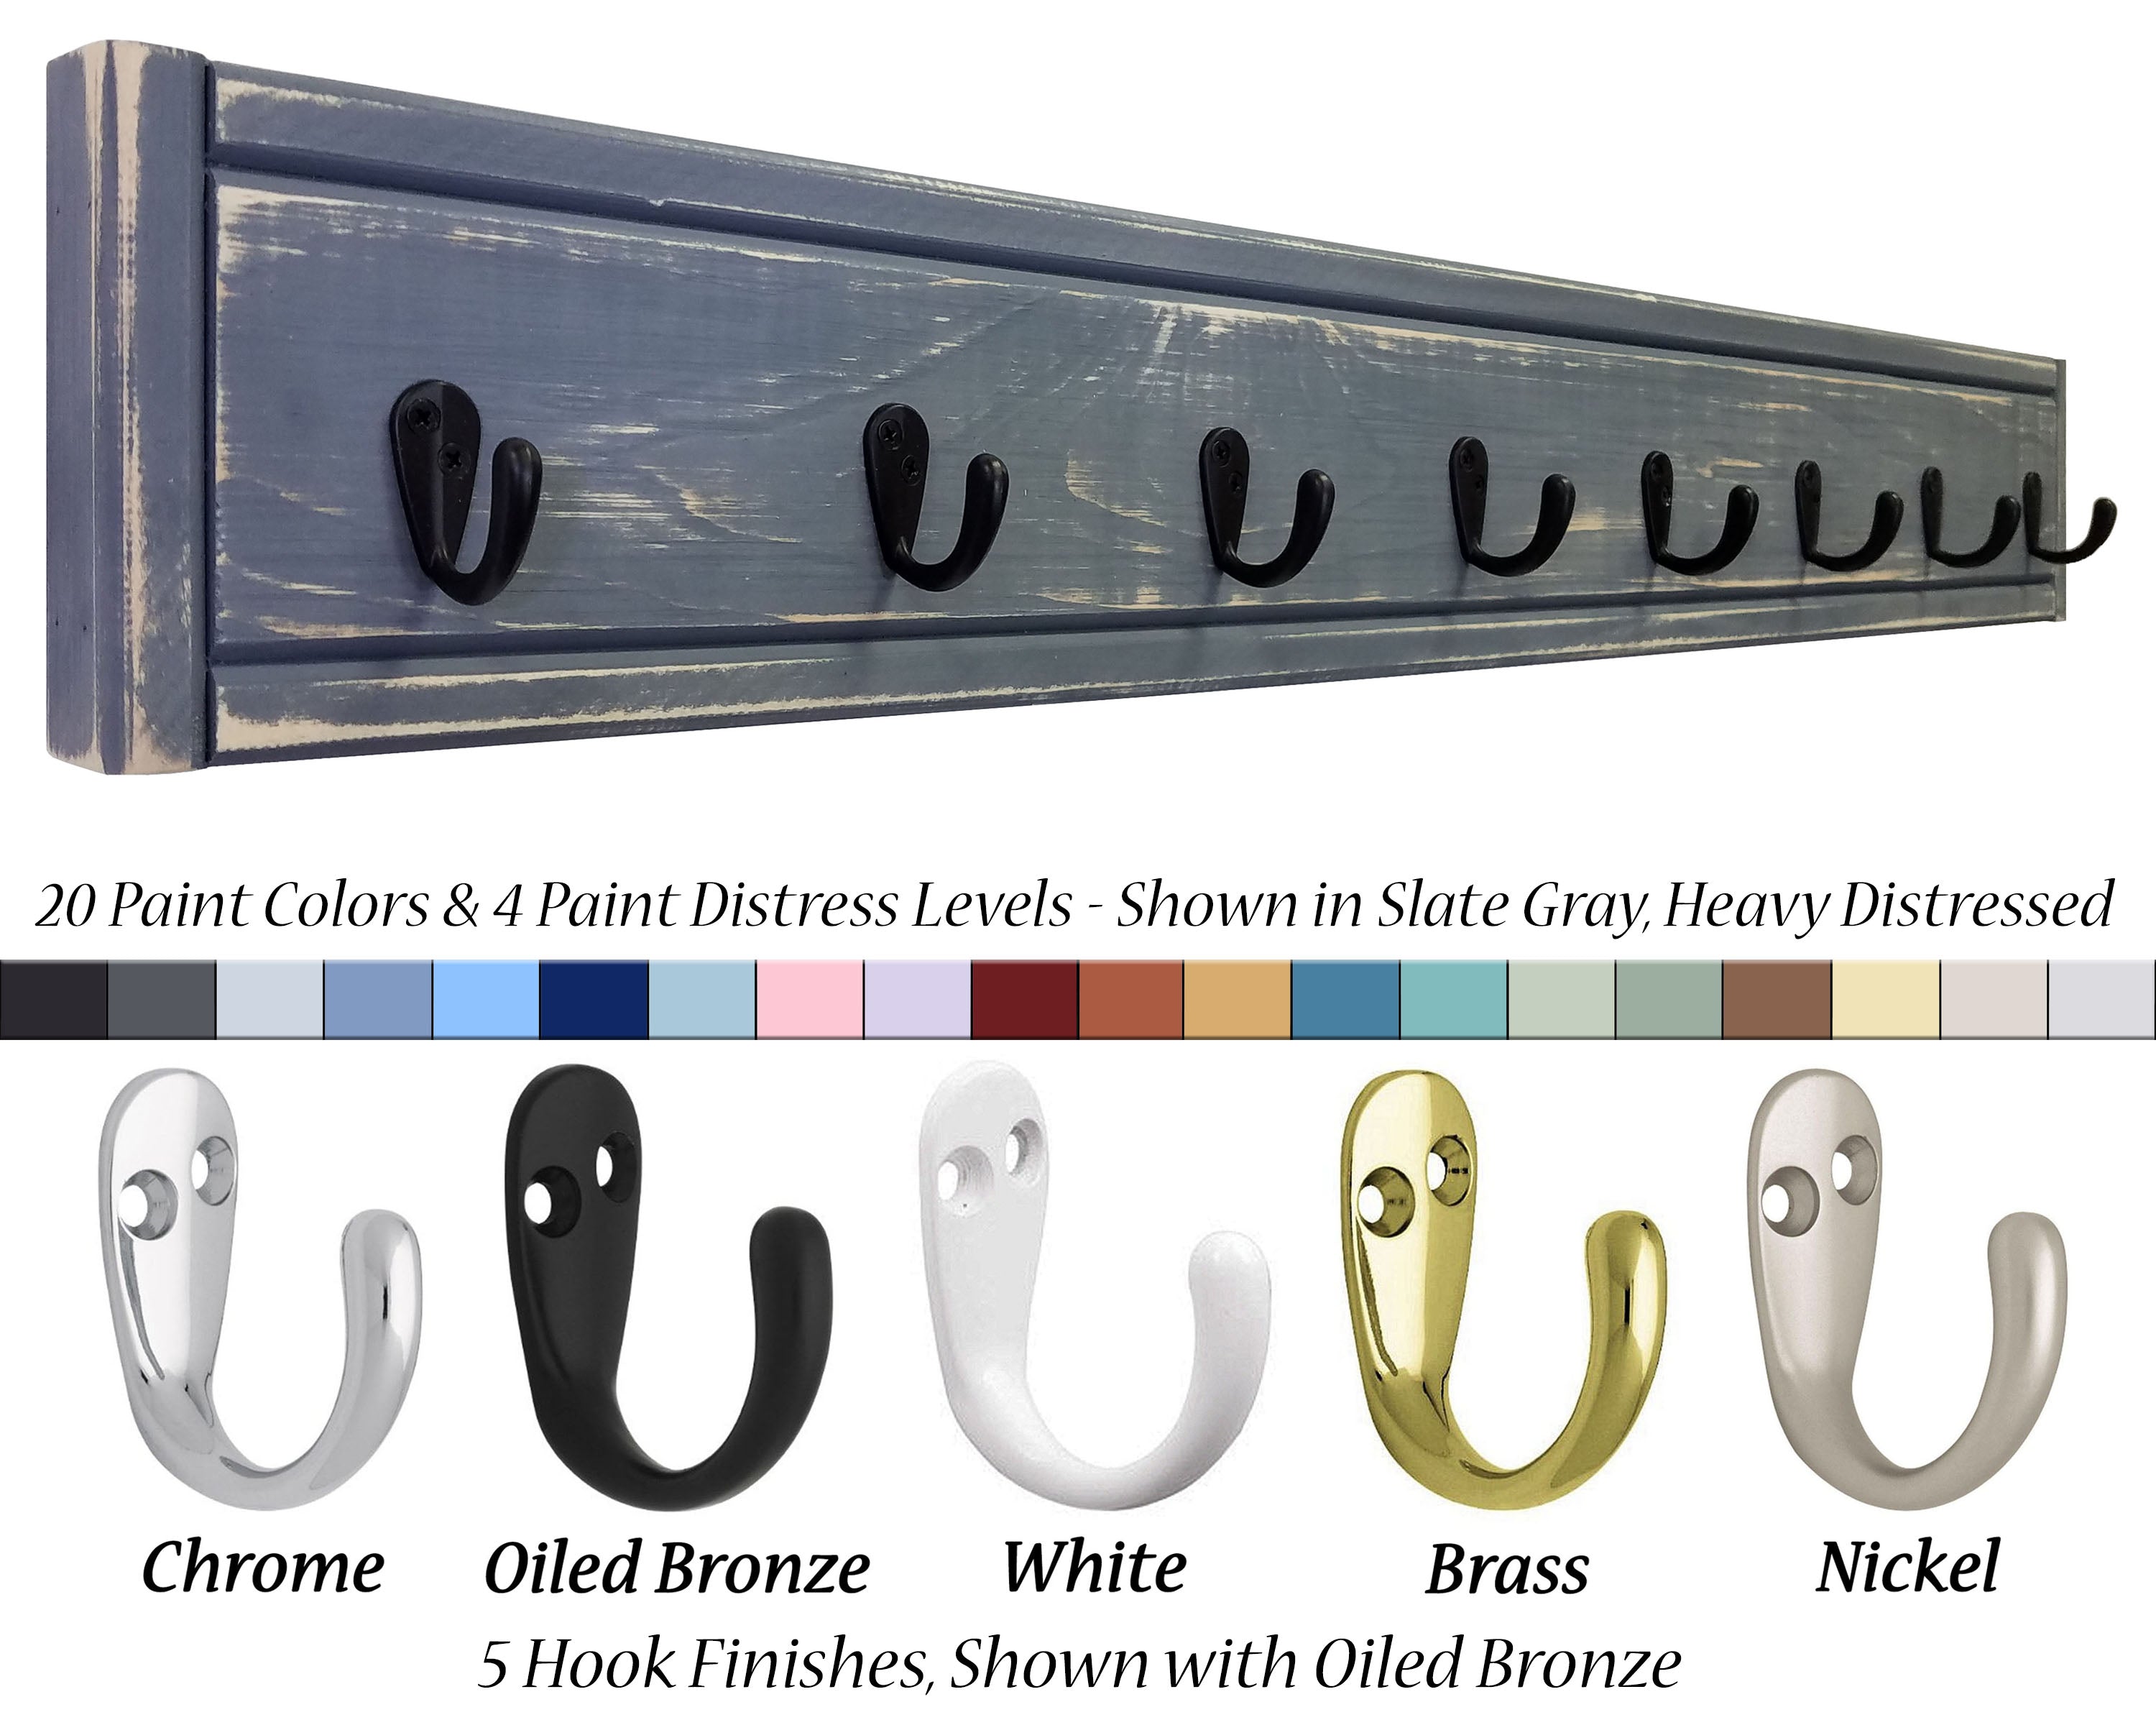 Herringbone Wall Hook Coat Rack, 20 Paint Colors & 5 Hook Finishes